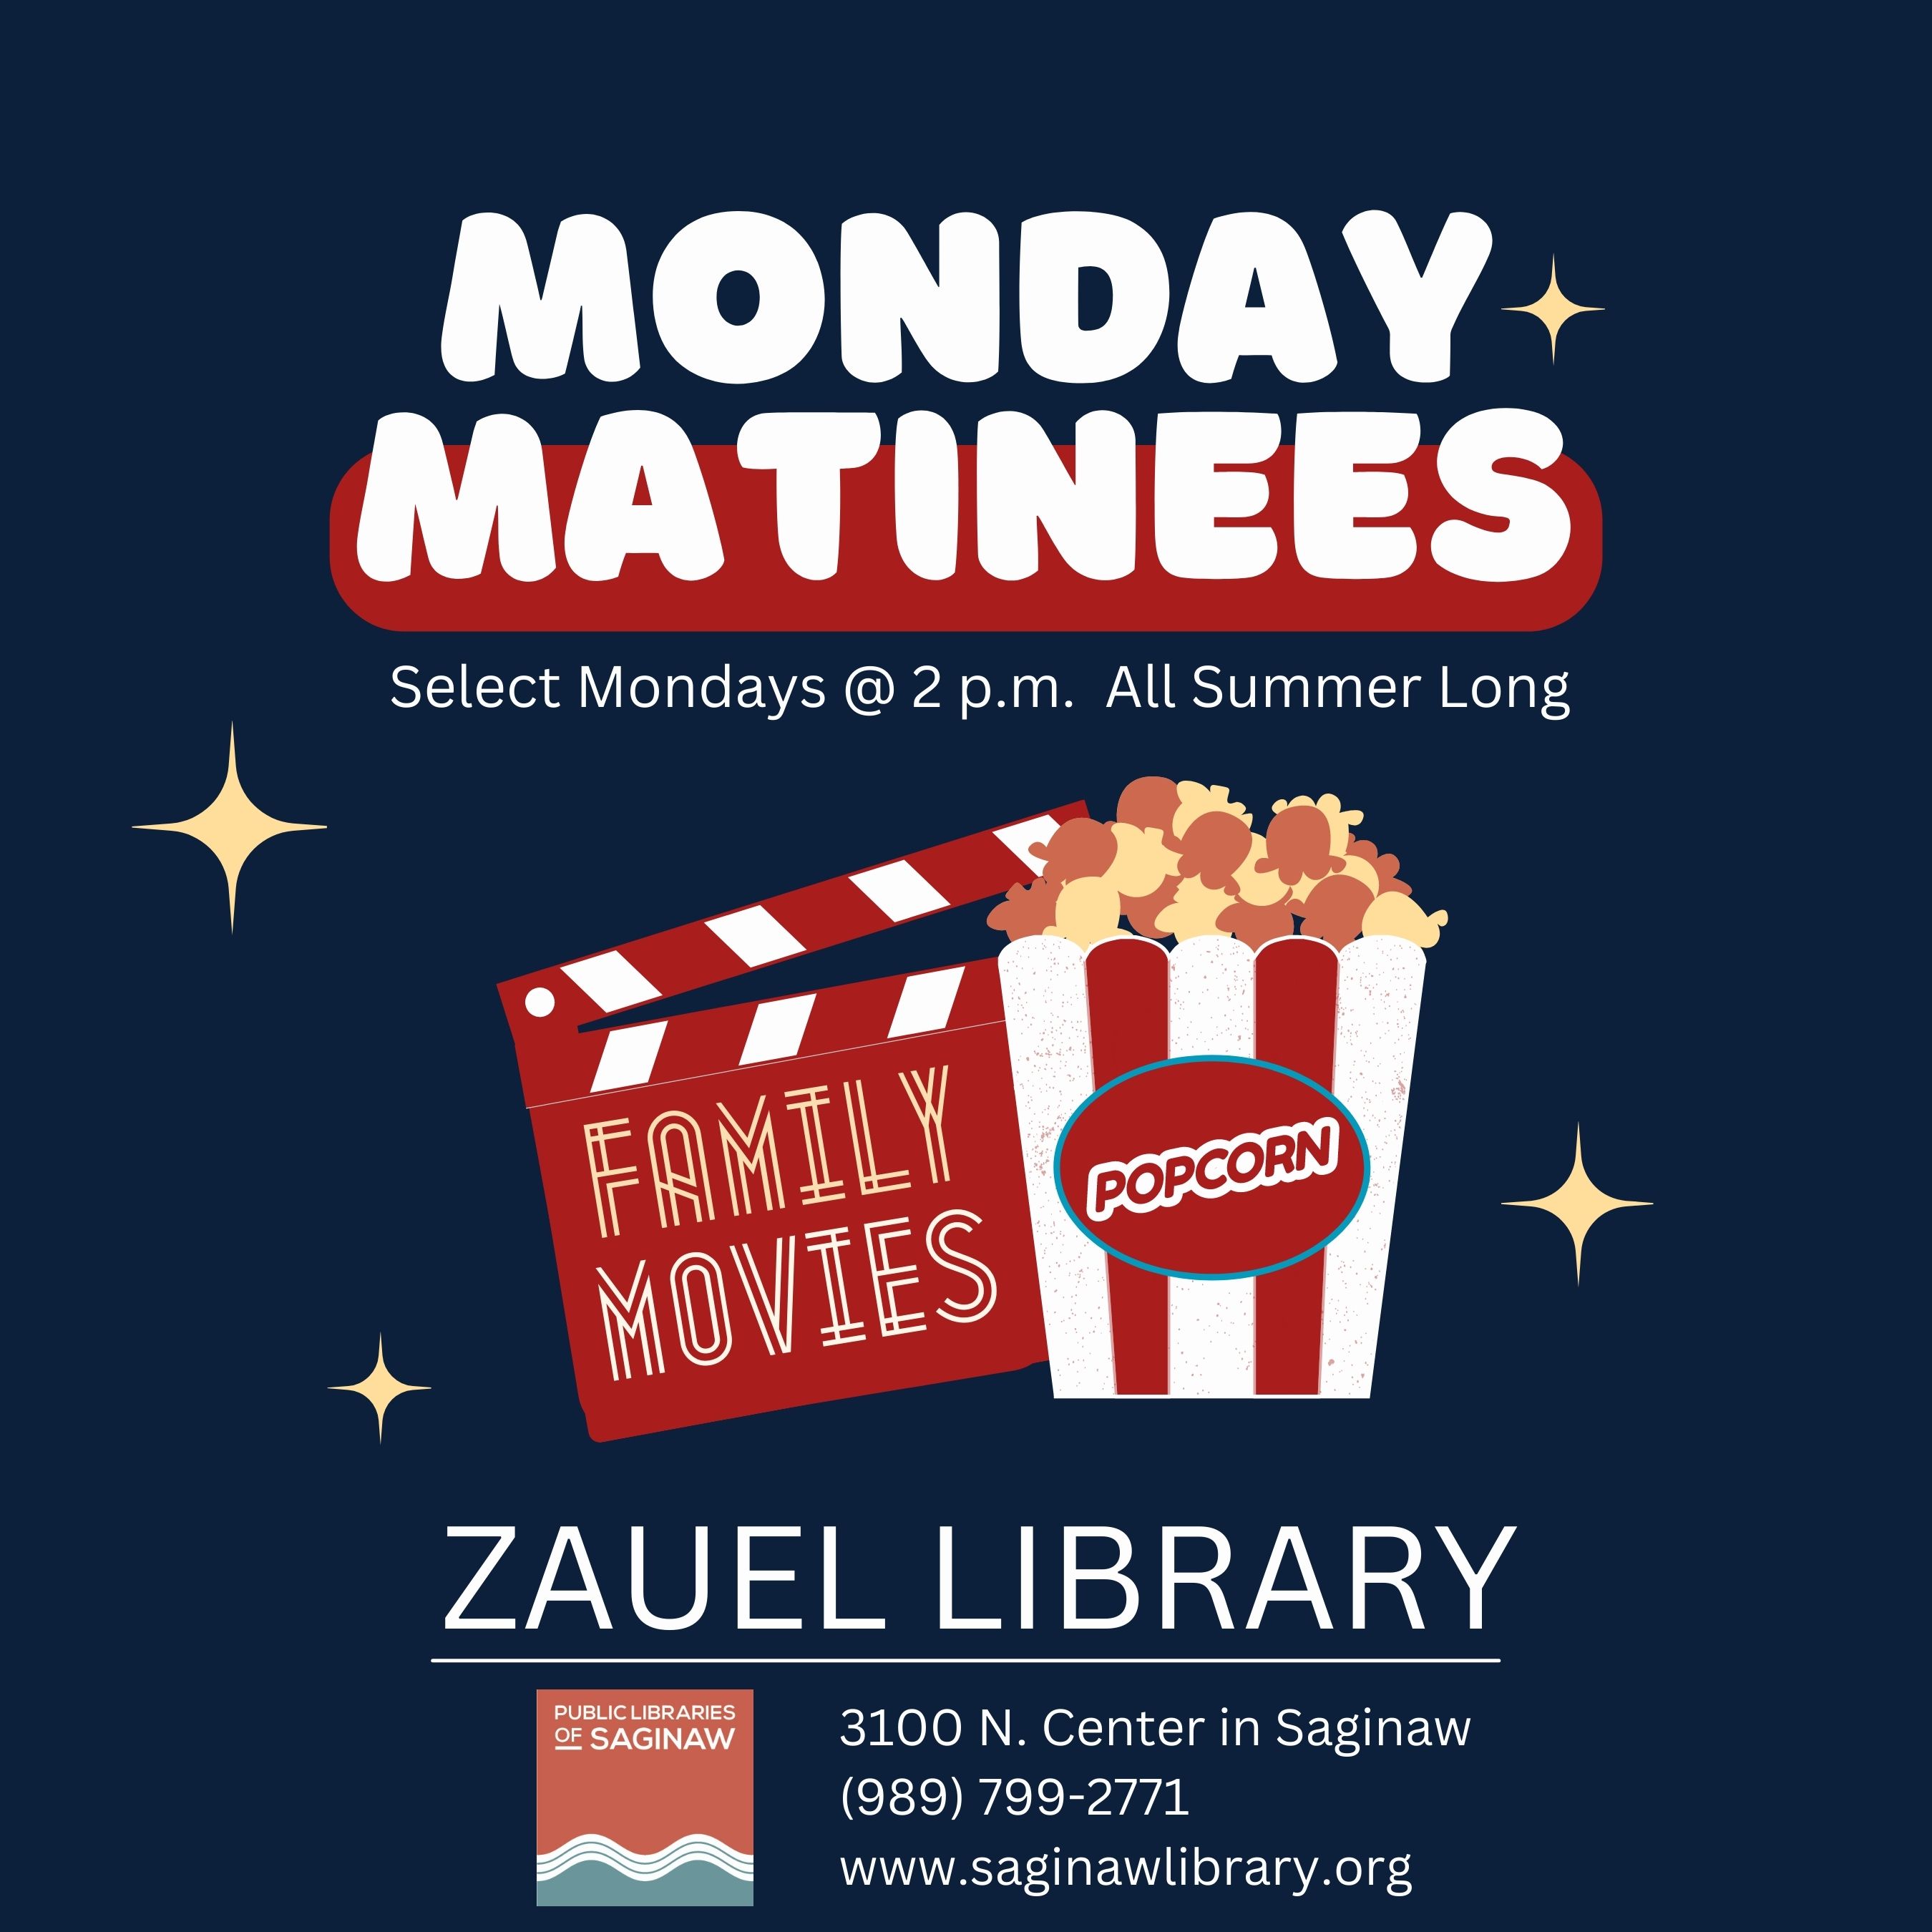 Monday Matinees on select Mondays at 2 p.m. all summer long at Zauel Library